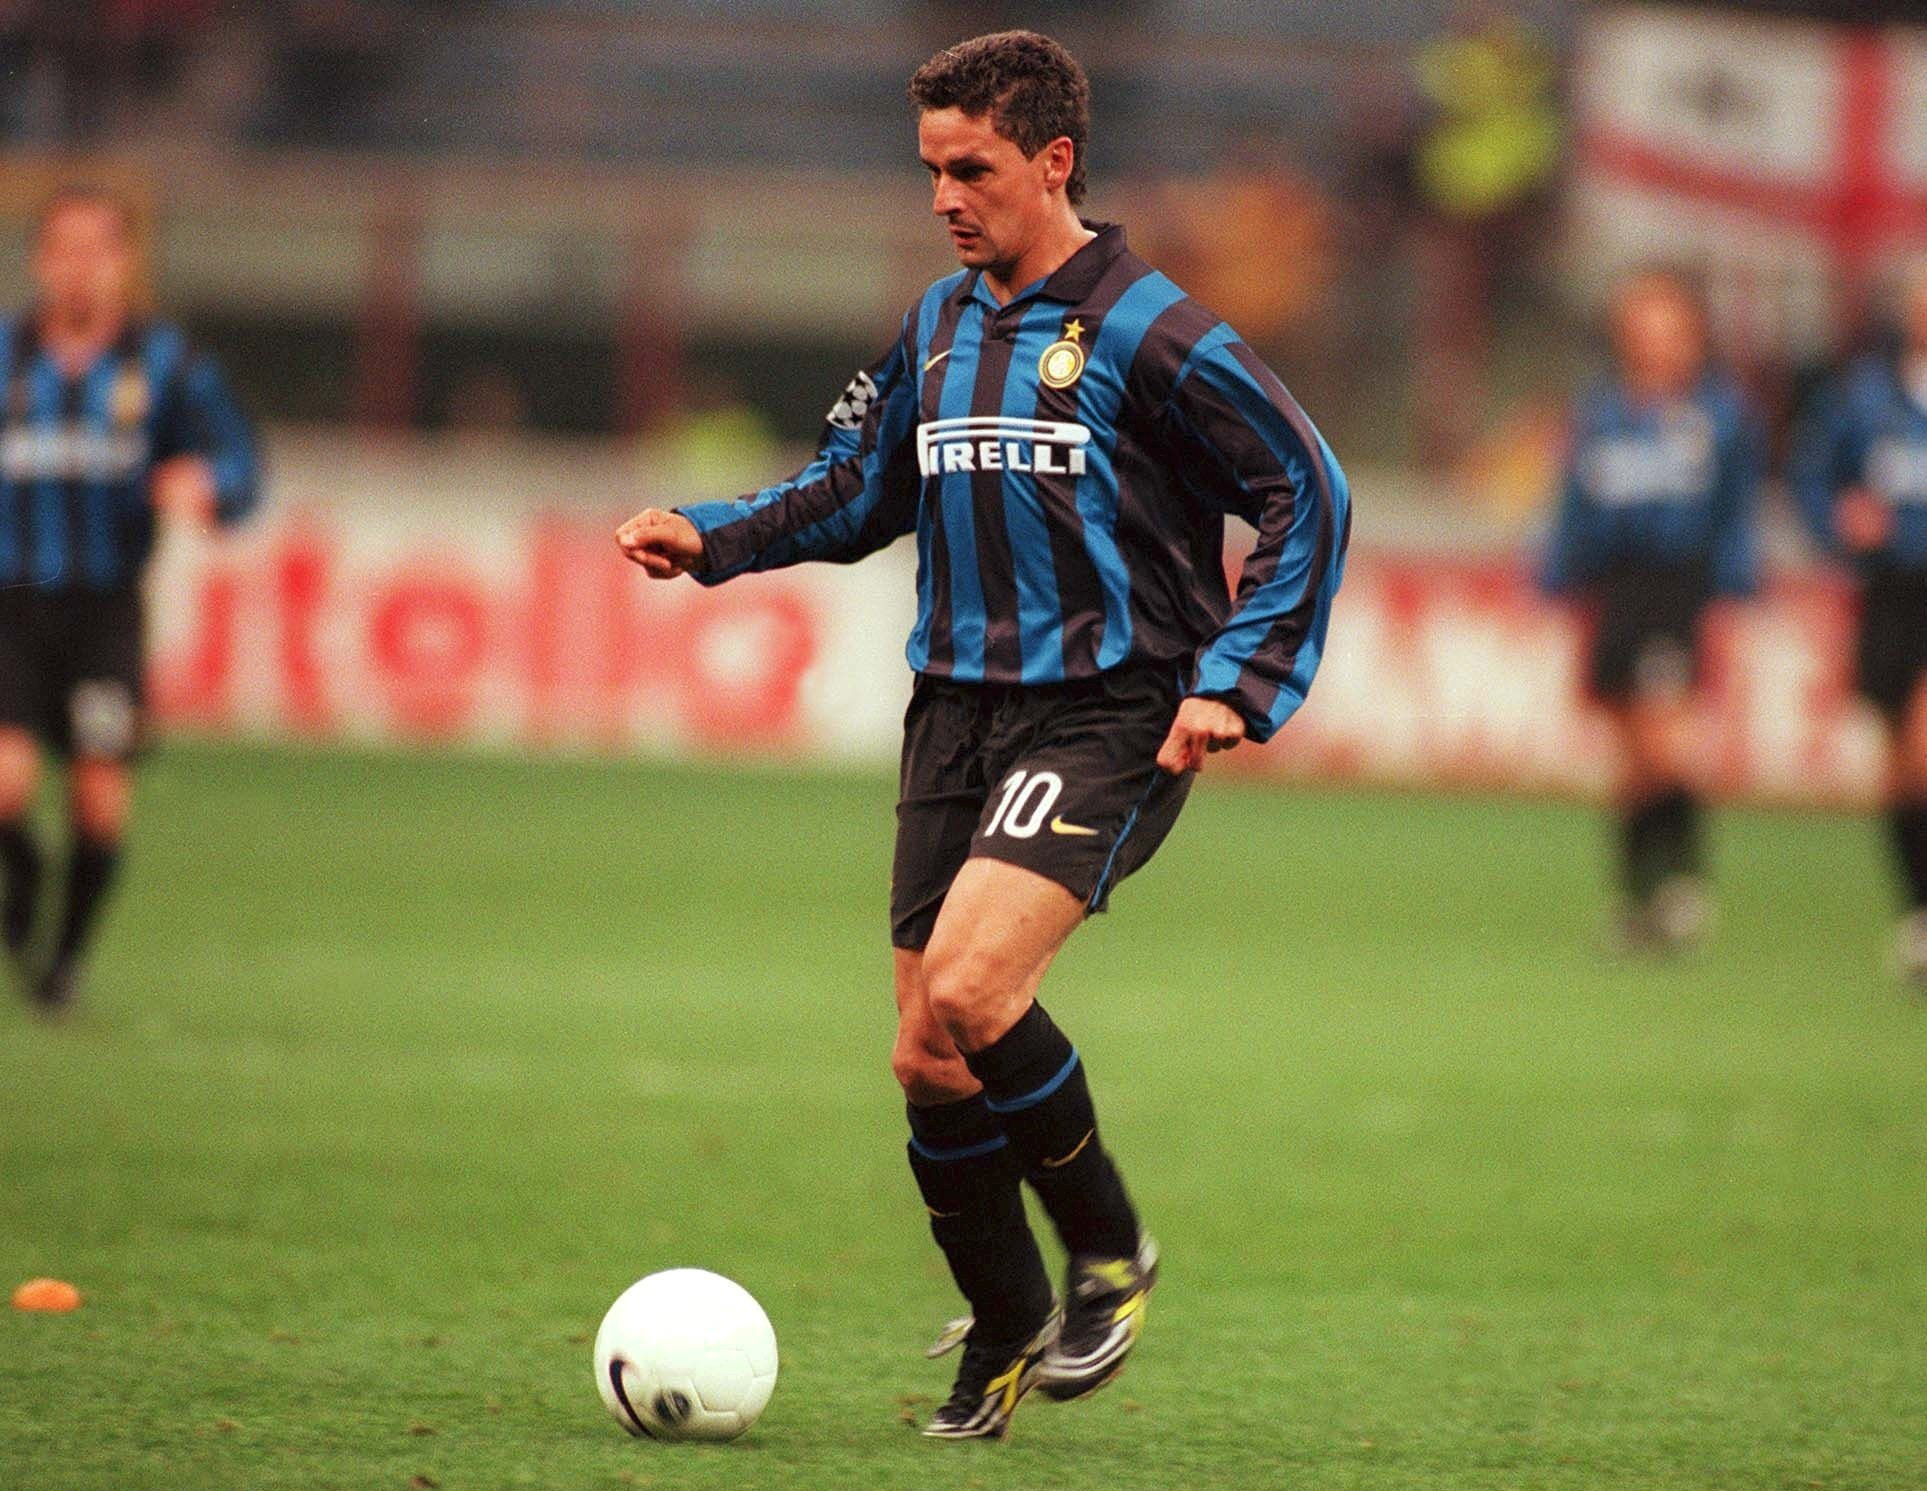 Roberto Baggio: “Fiorentina showed me affection, the same happened to Borja Valero.”